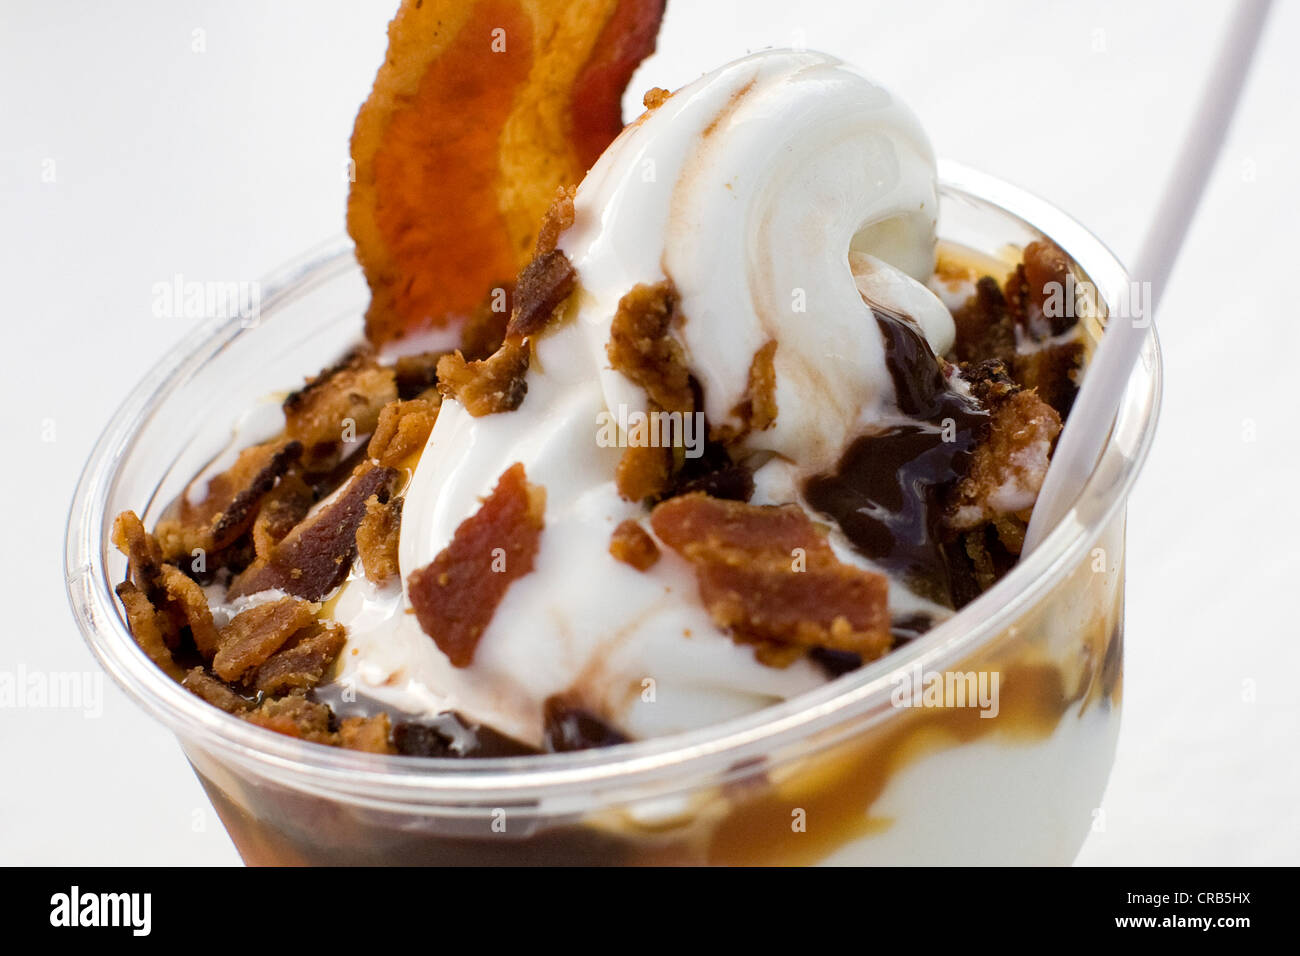 A Burger King bacon ice cream sundae.  Stock Photo